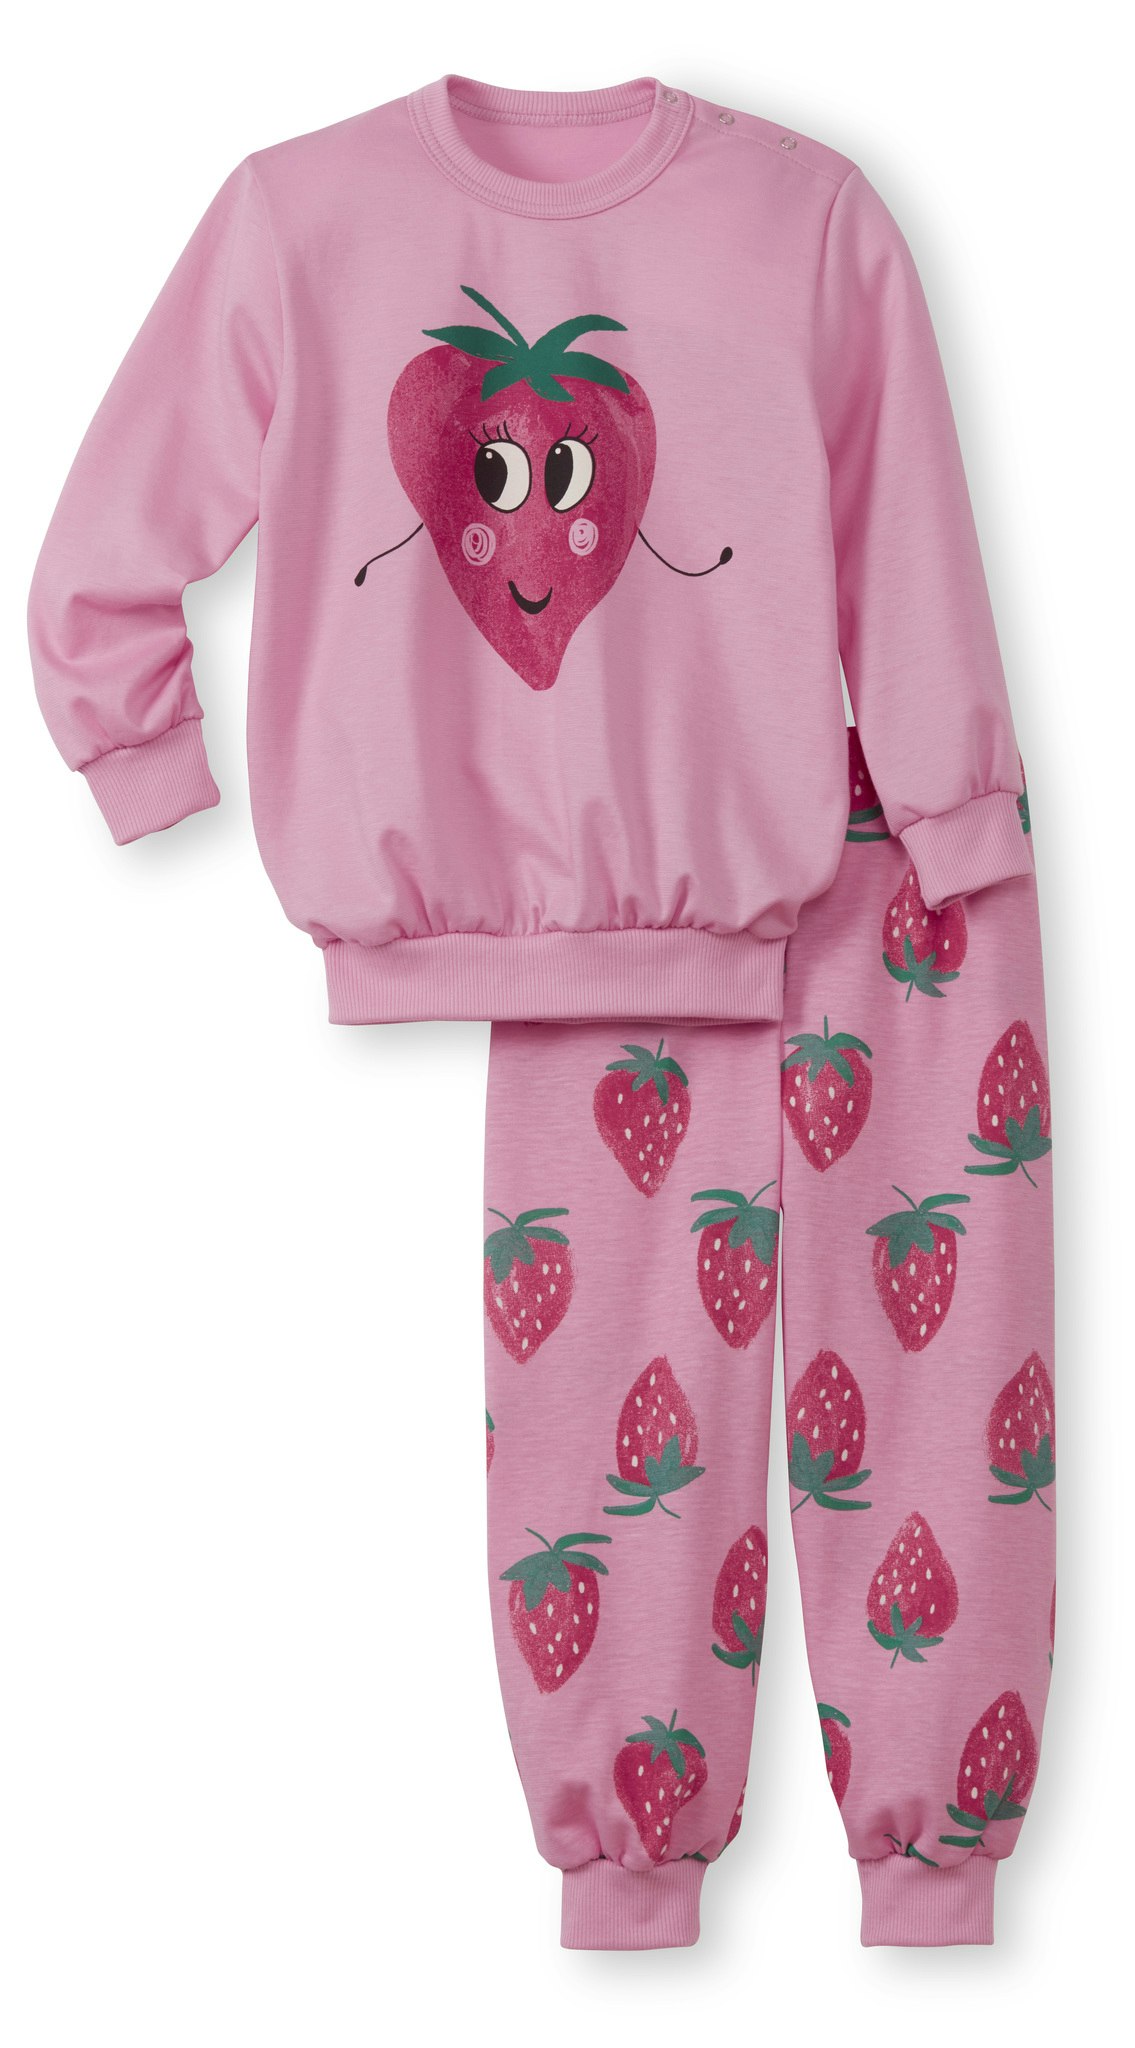 Calida barn pyjamas Toddlers strawberry 56272 274 begonia pink - Näckrosen  Underkläder